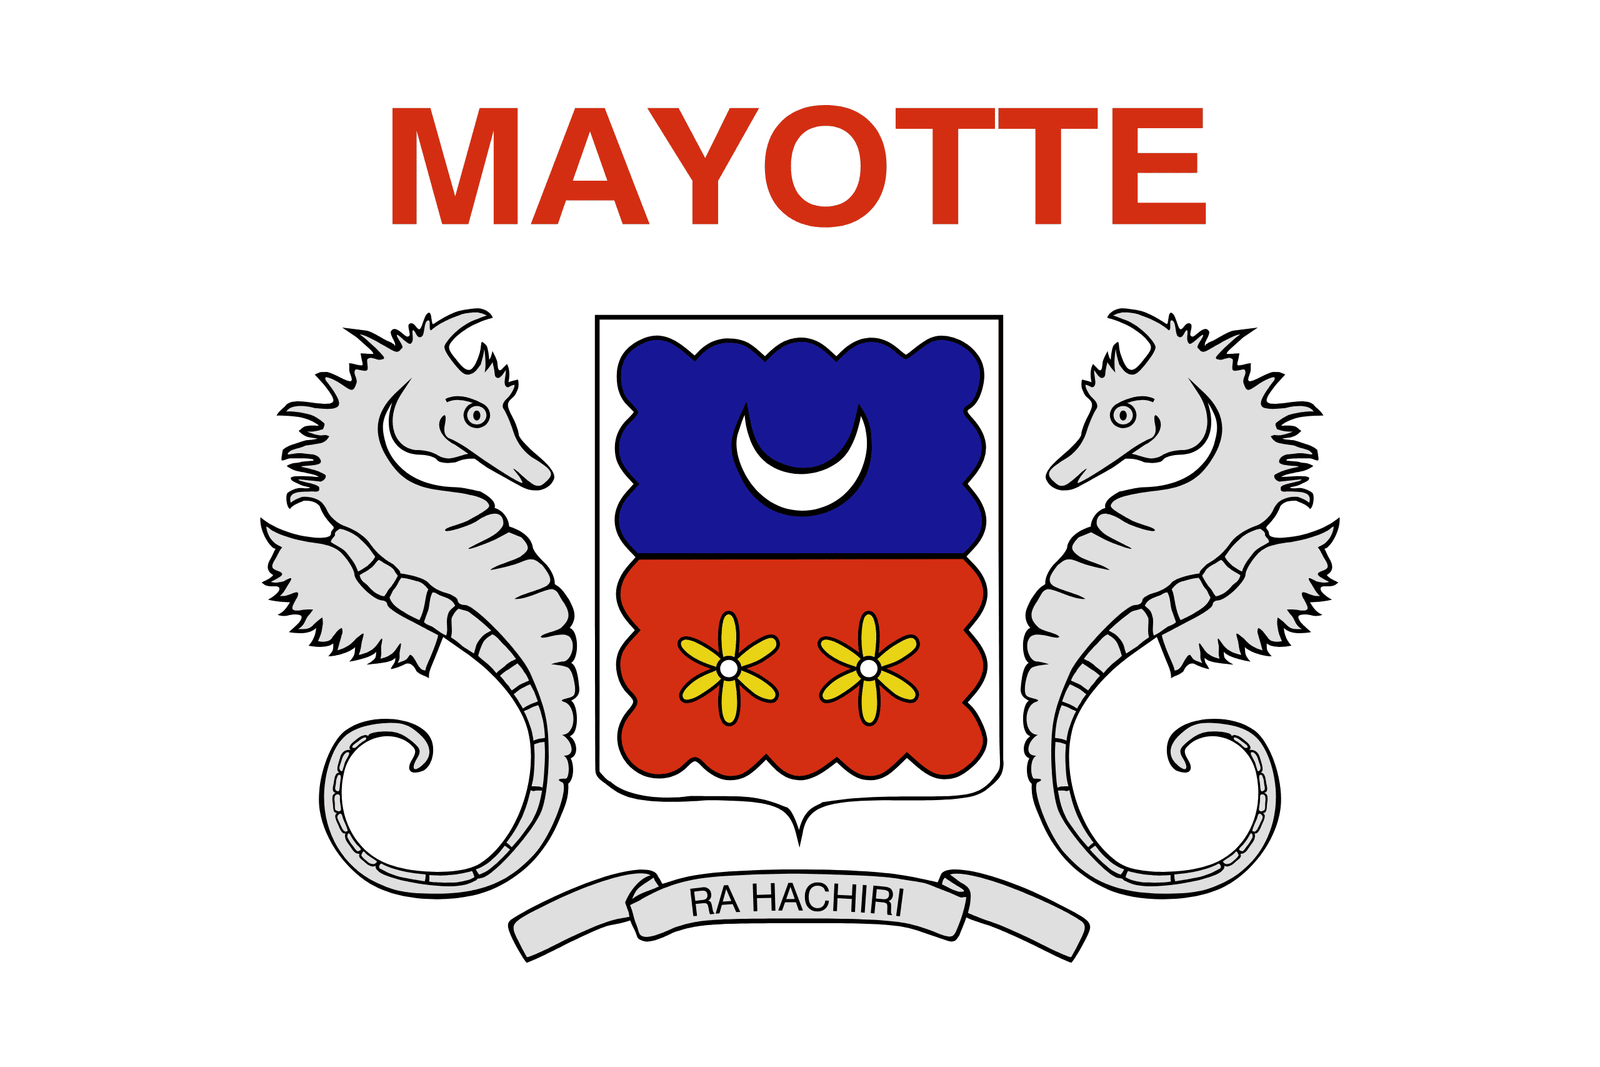 Mayotte - Powered by Eduhyme.com